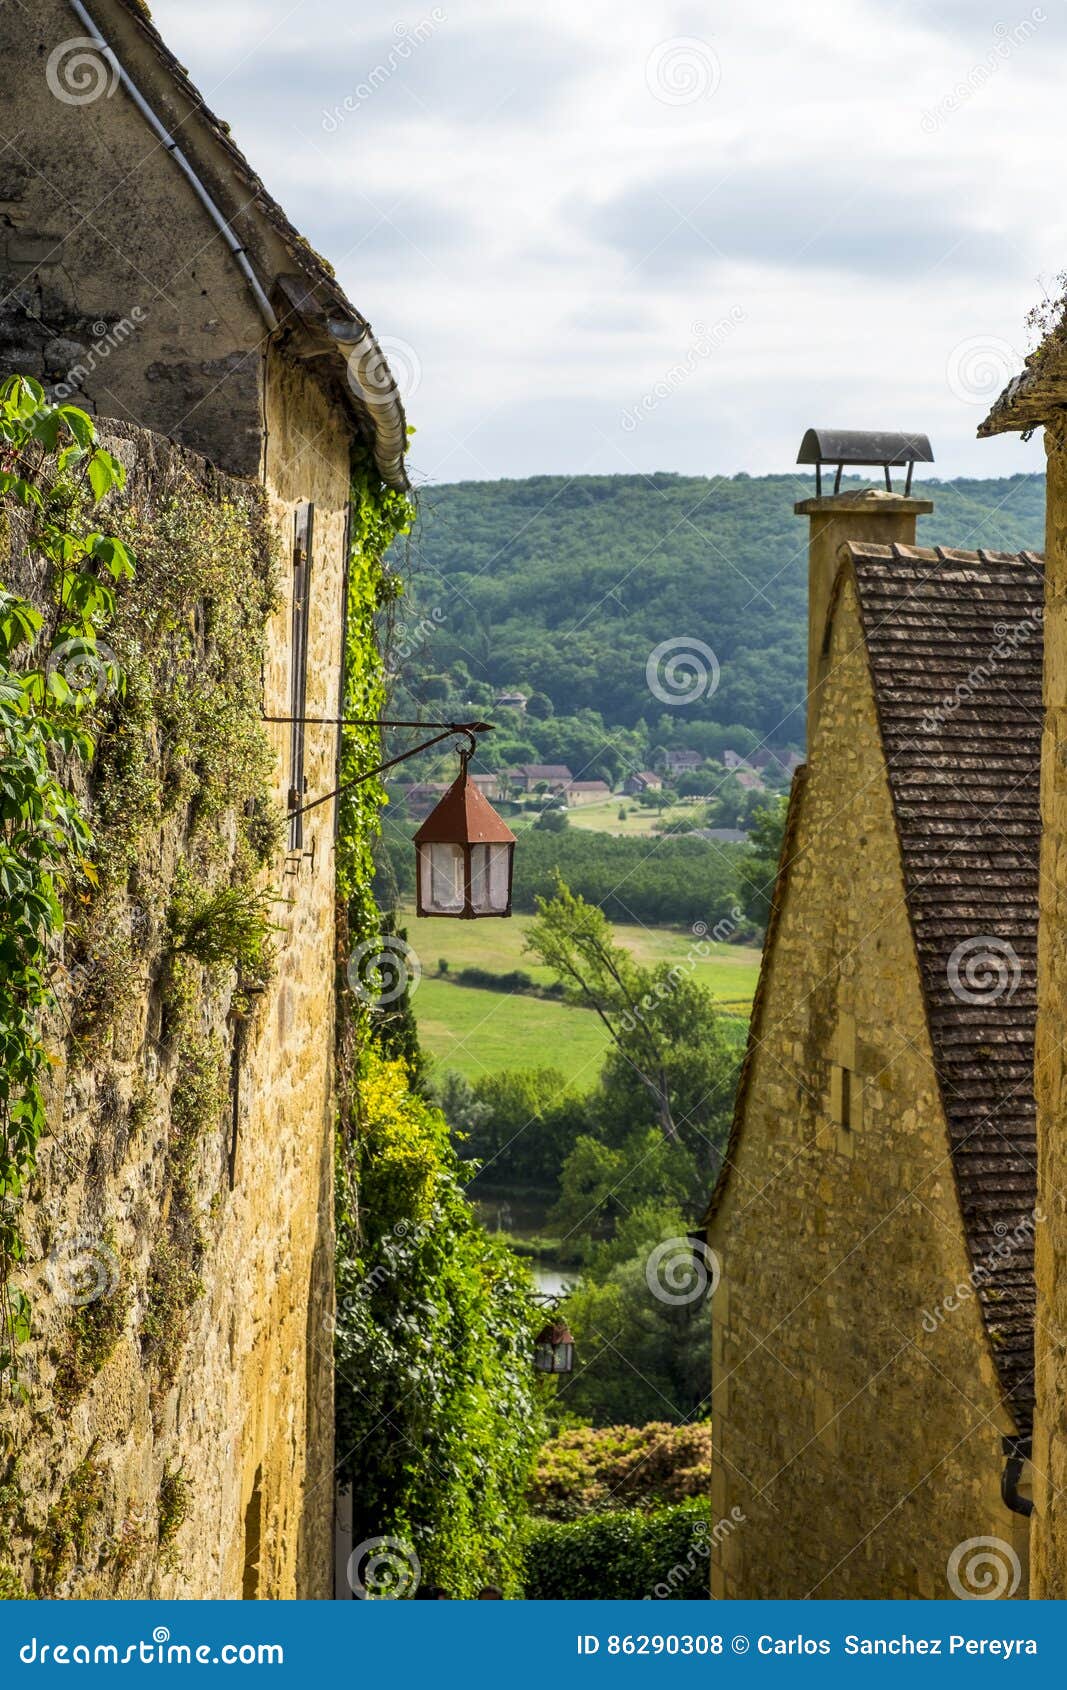 village of beynac-et-cazenac at dordogne valley france